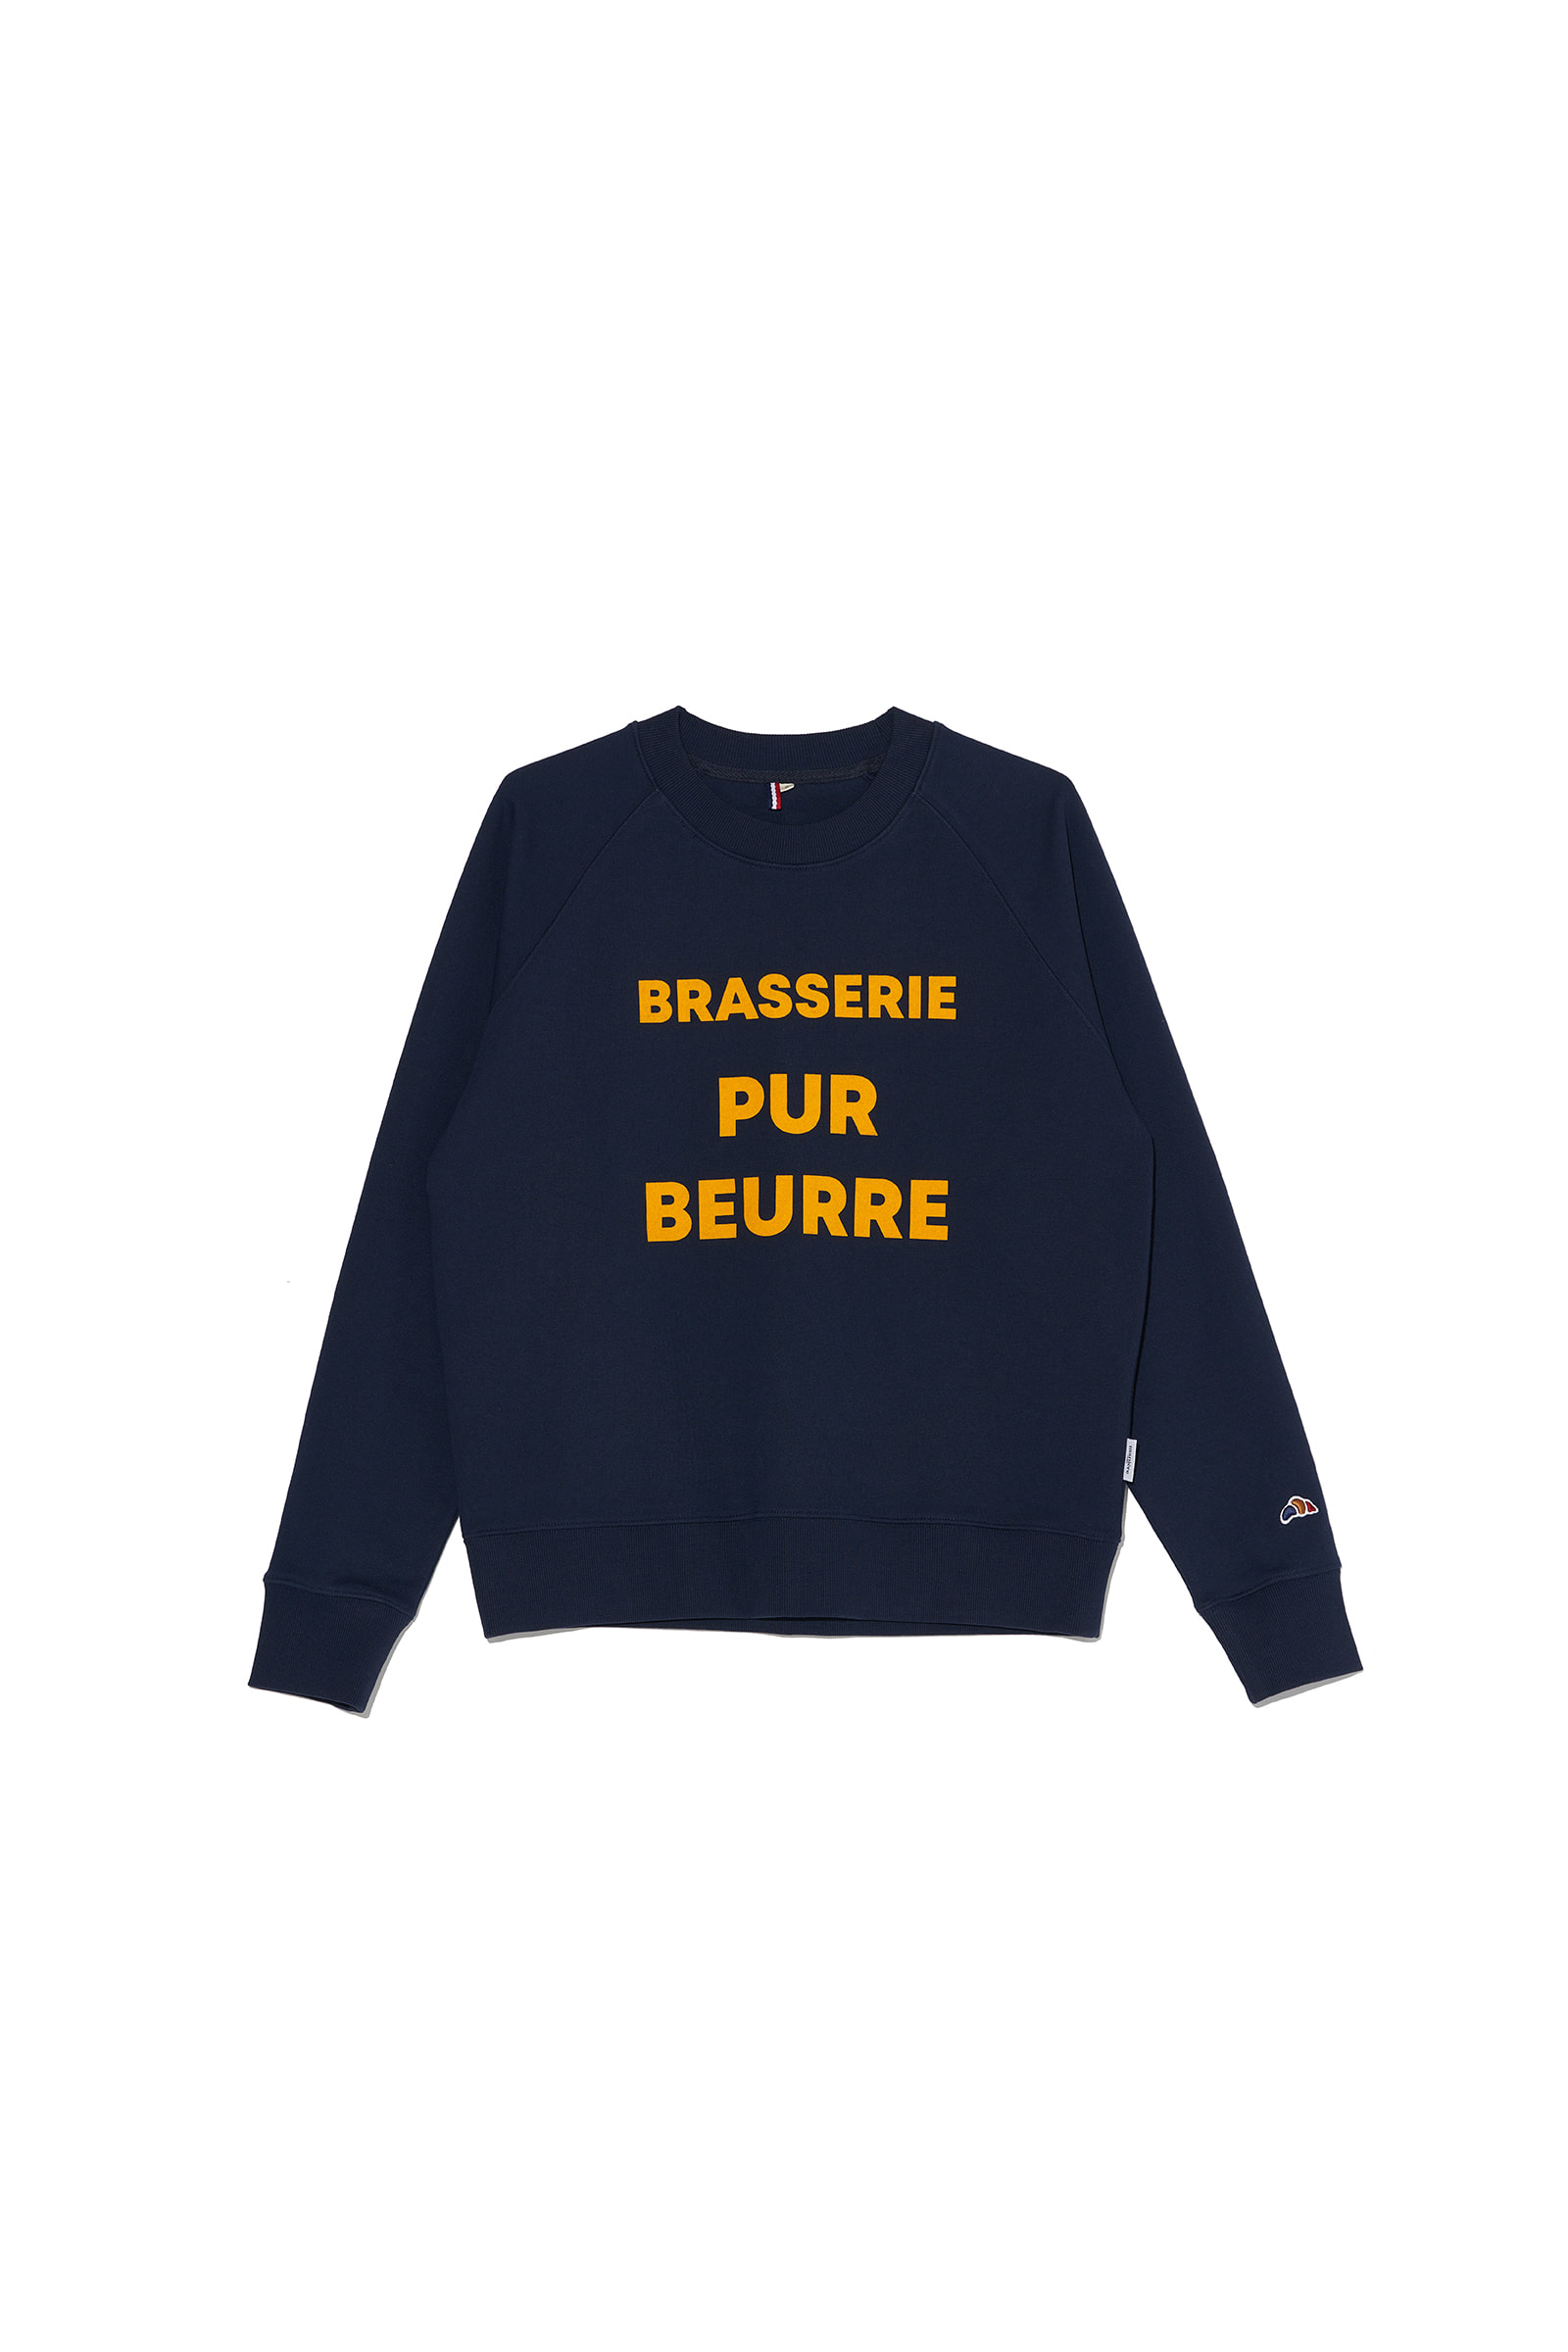 ep.6 BRASSERIE PUR BEURRE lettering sweatshirts (Navy)